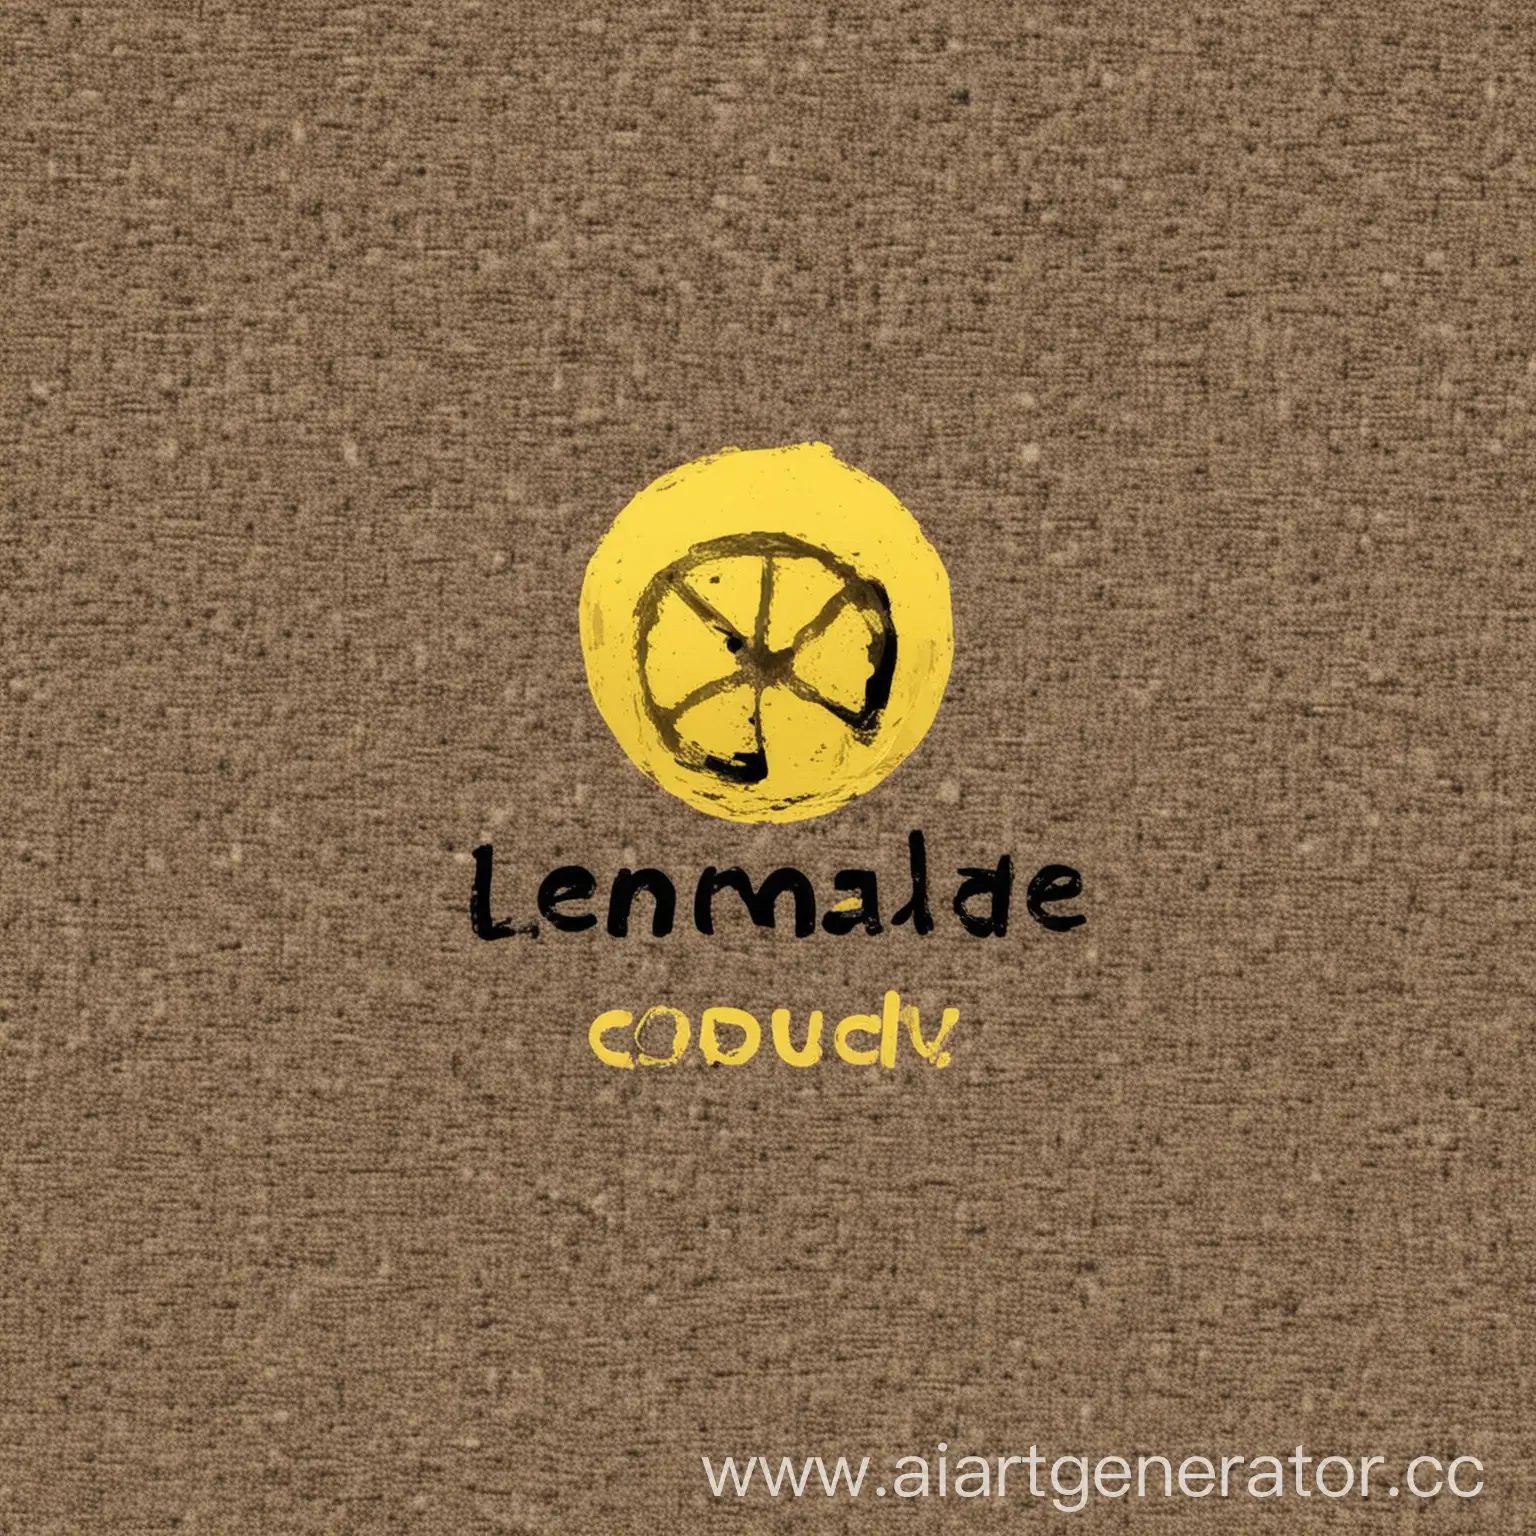 Logo-Design-for-Lemonade-Node-Construction-Company-Raw-Materials-OnDemand-Labor-Complete-Services